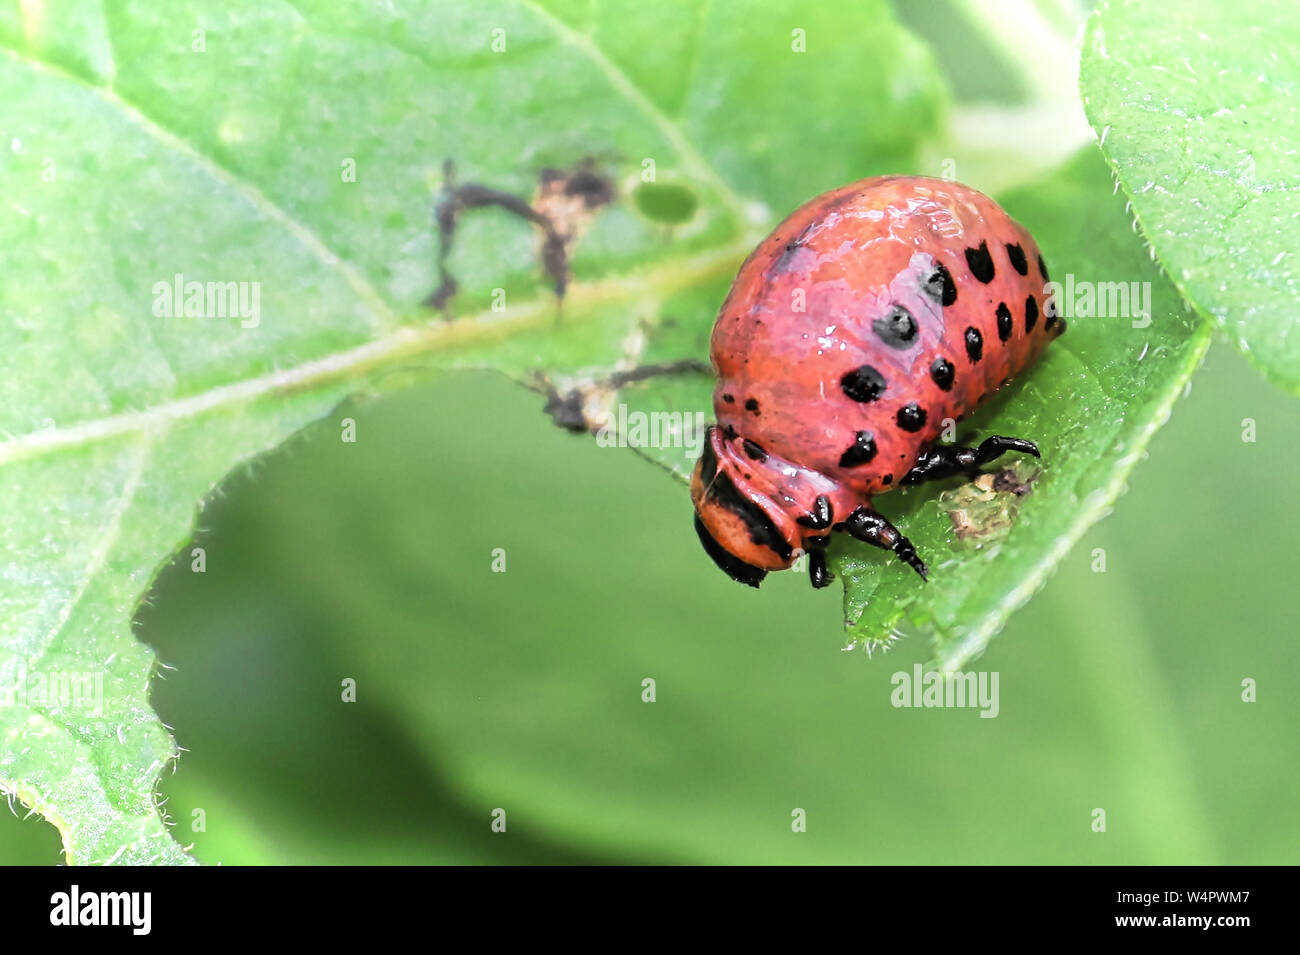 Ckoseup of a Potatoe Beetle Larave on a green background Stock Photo